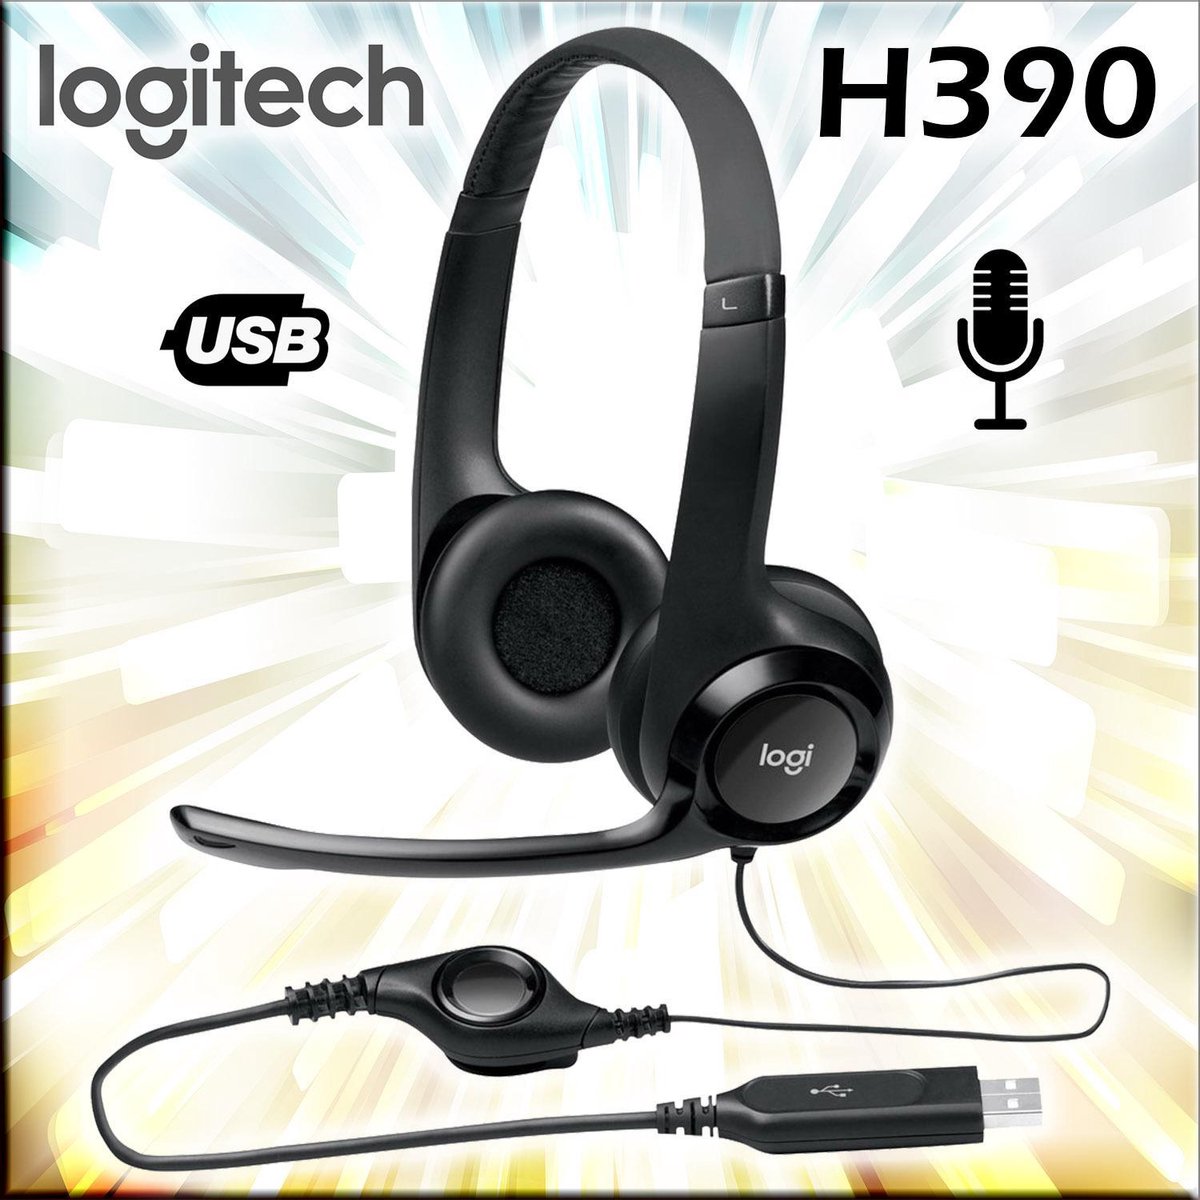 Logitech headset H390 - USB hoofdtelefoon / koptelefoon met microfoon